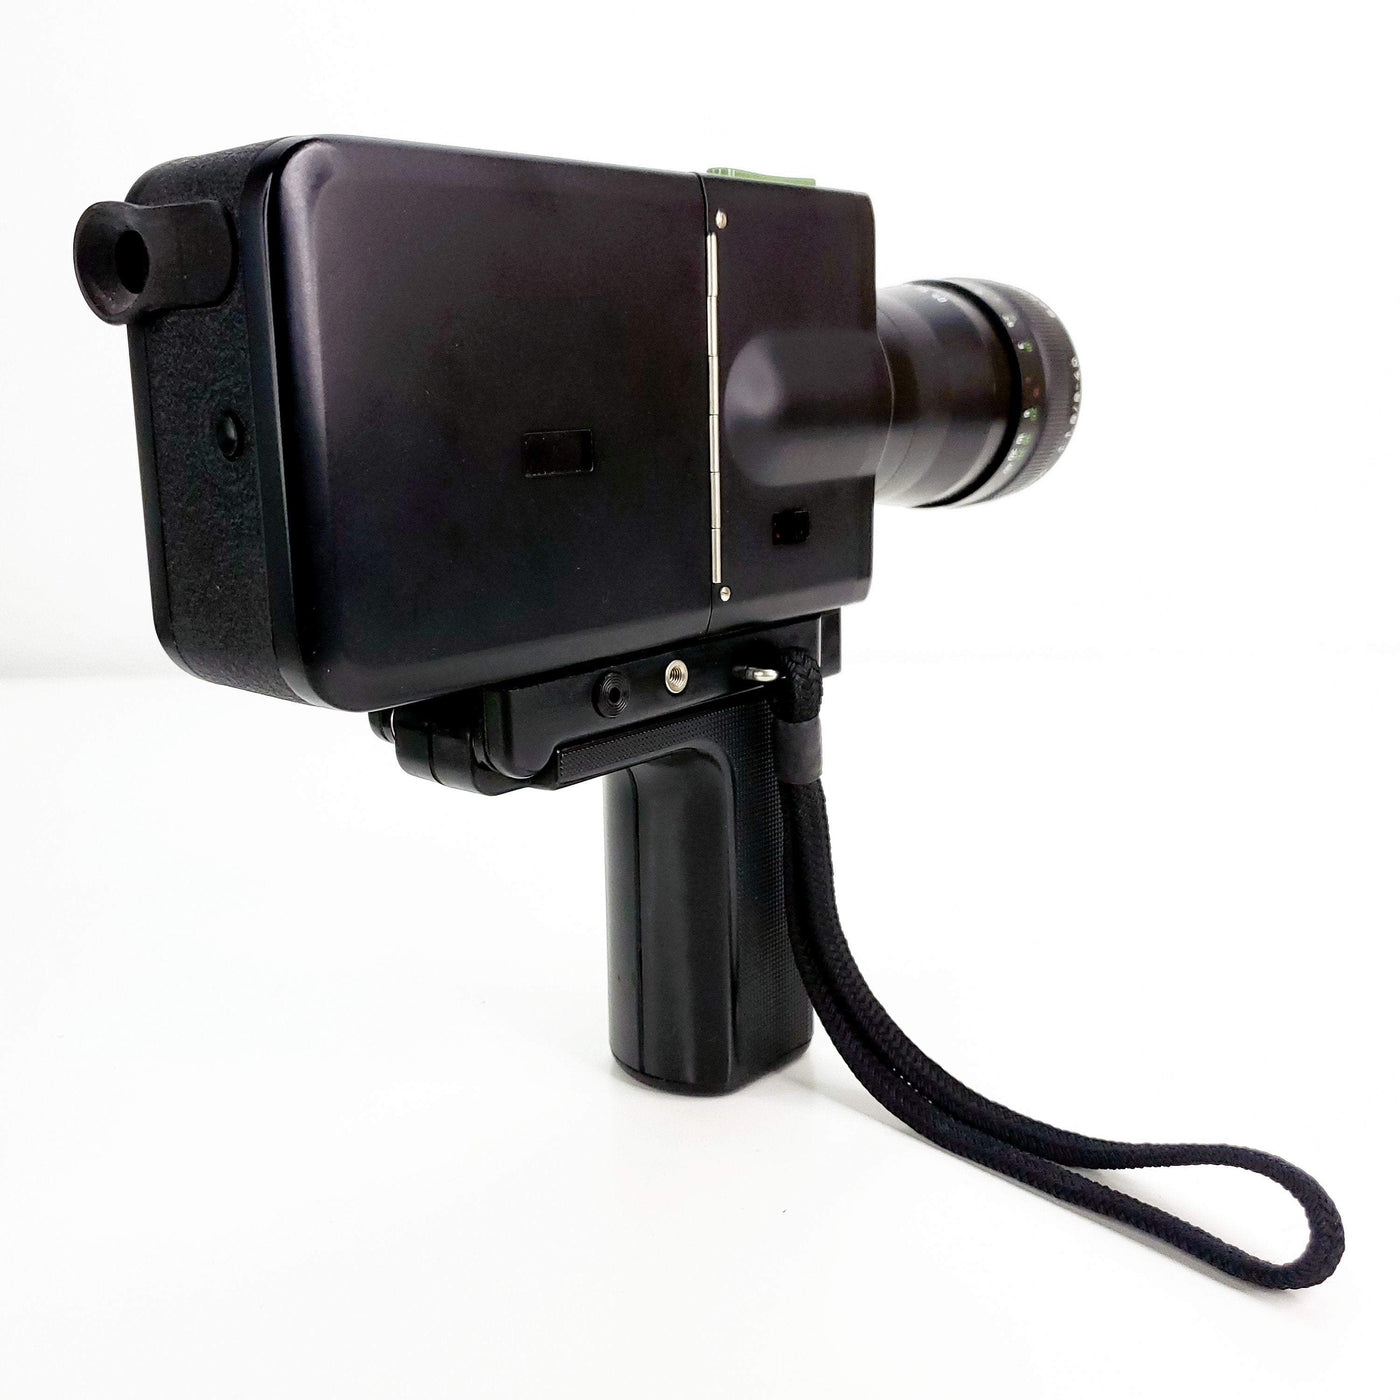 Nizo S2 Super 8 Camera Professionally Serviced and Fully Functioning Super 8 Cameras Braun Nizo 